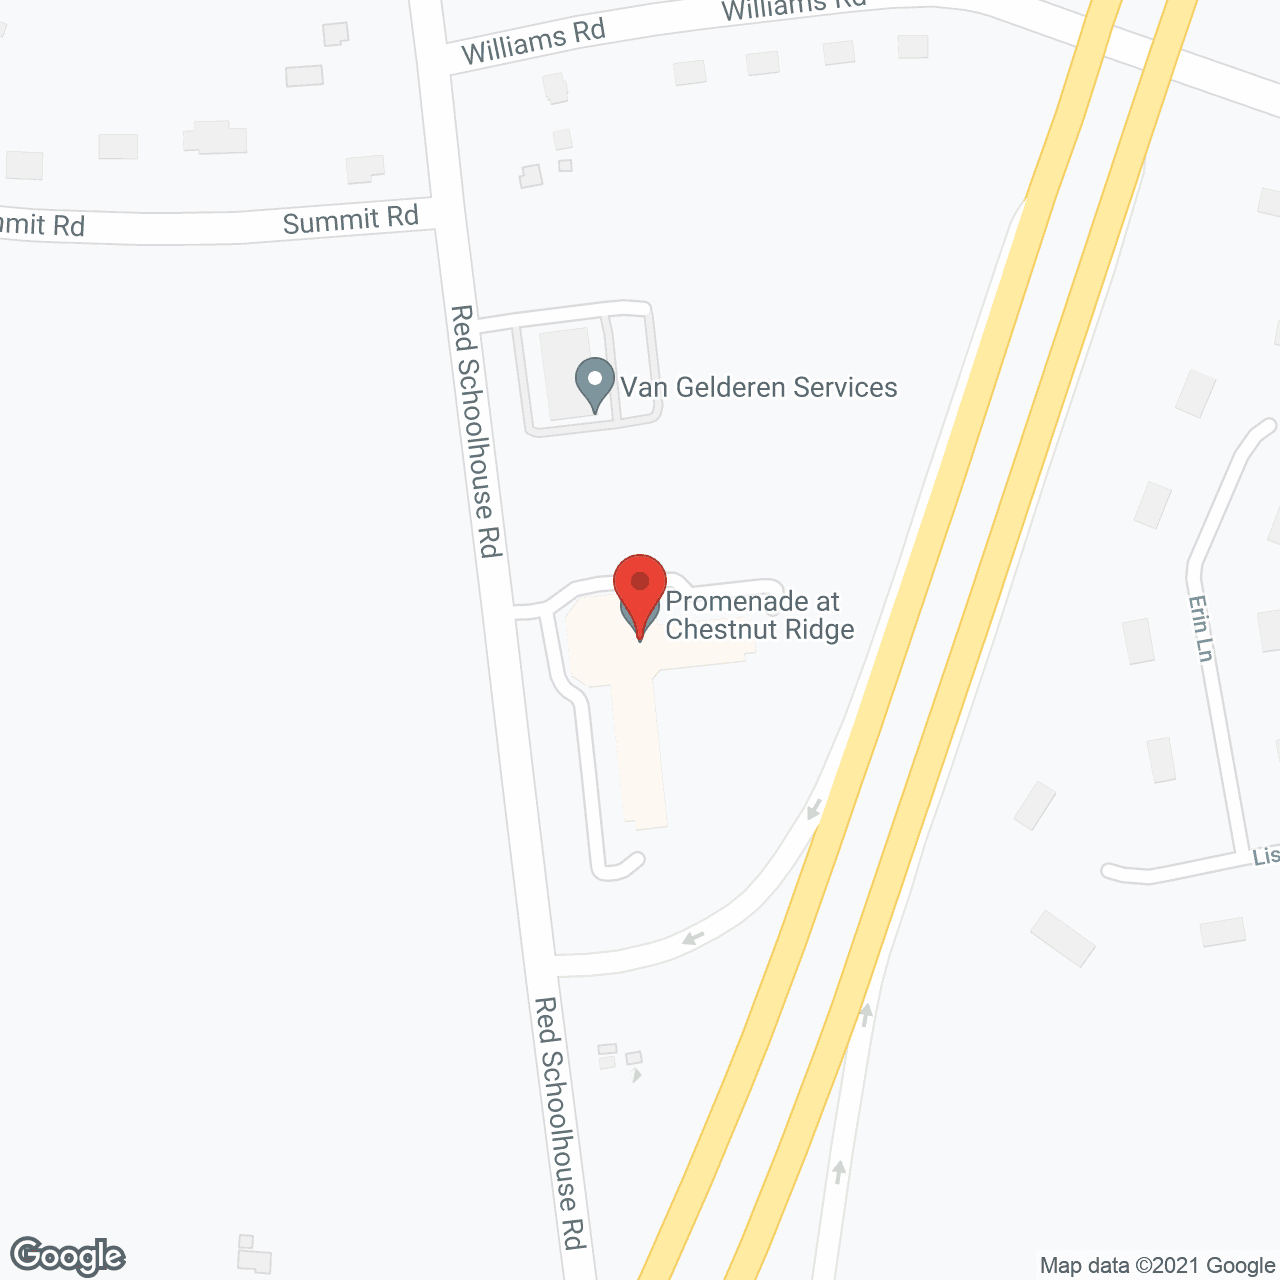 The Promenade at Chestnut Ridge in google map